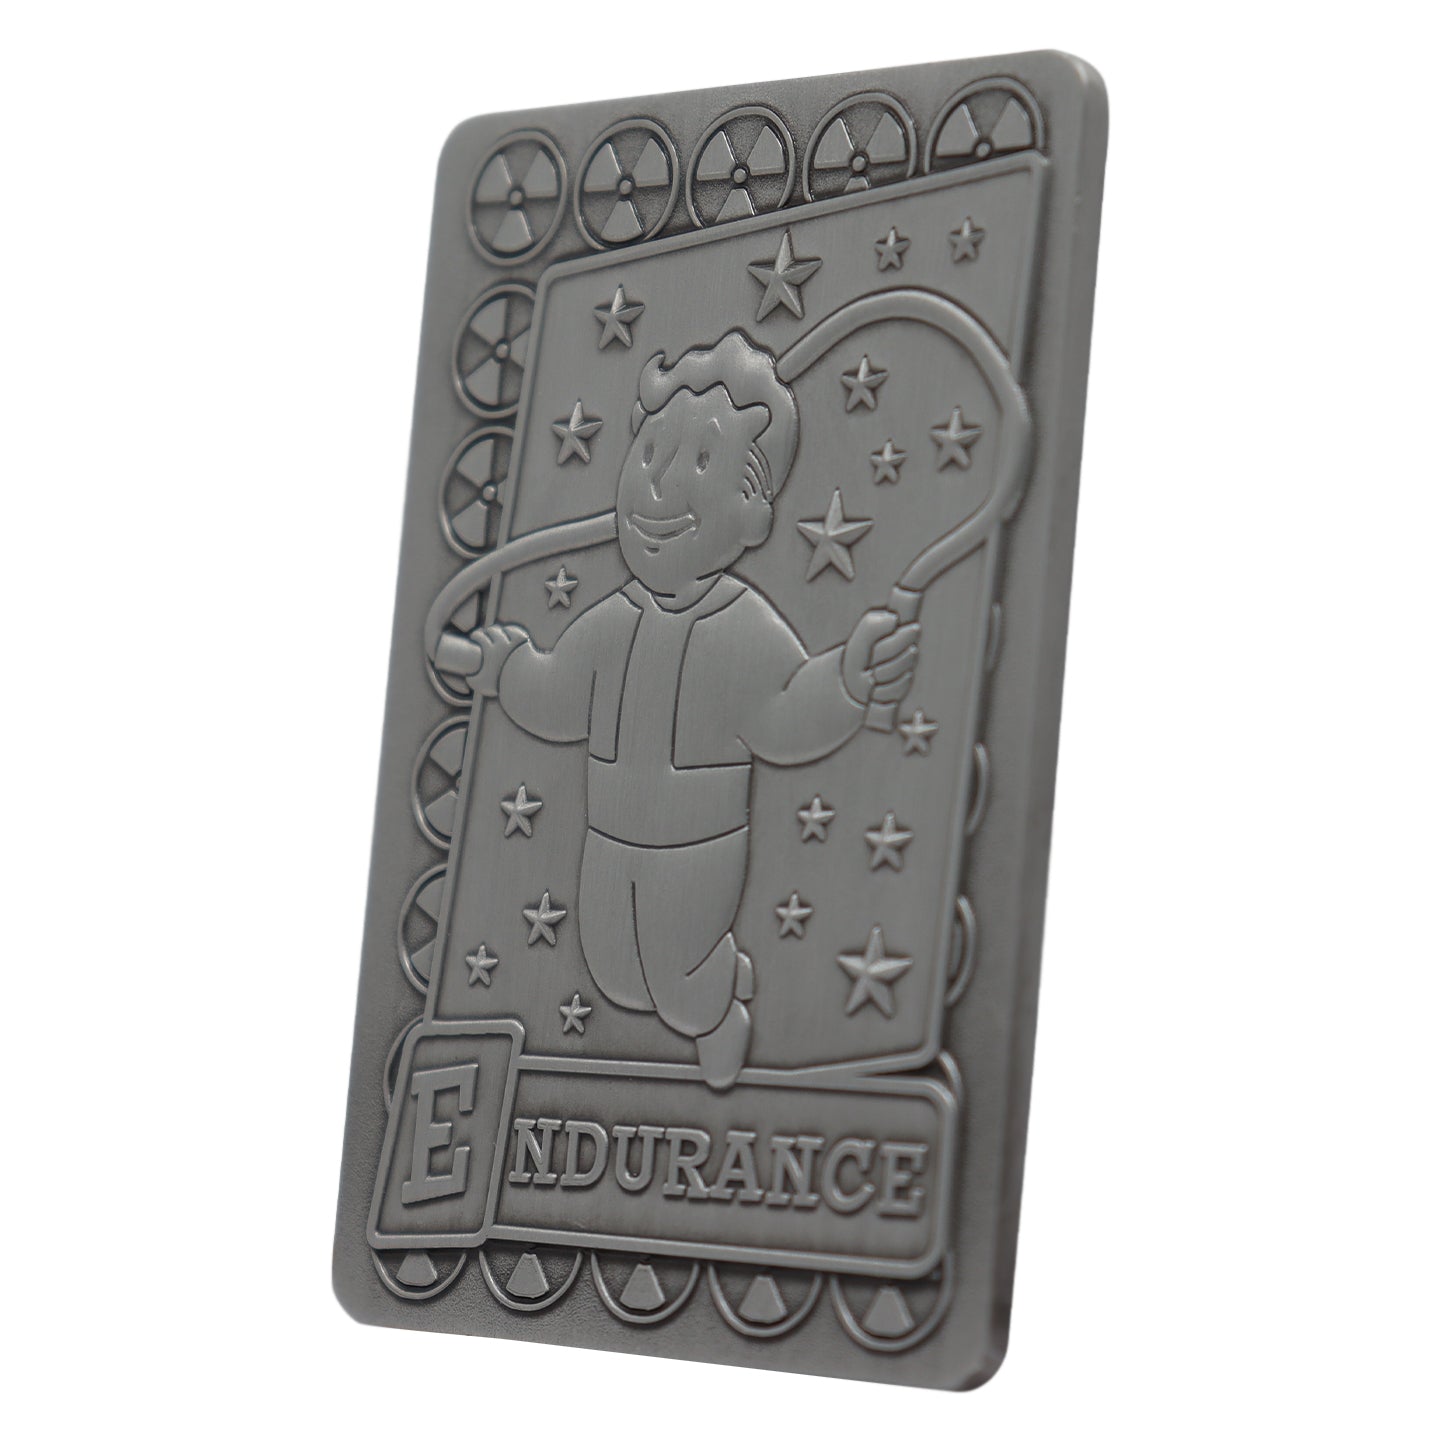 Fallout Limited Edition Replica Endurance Perk Card